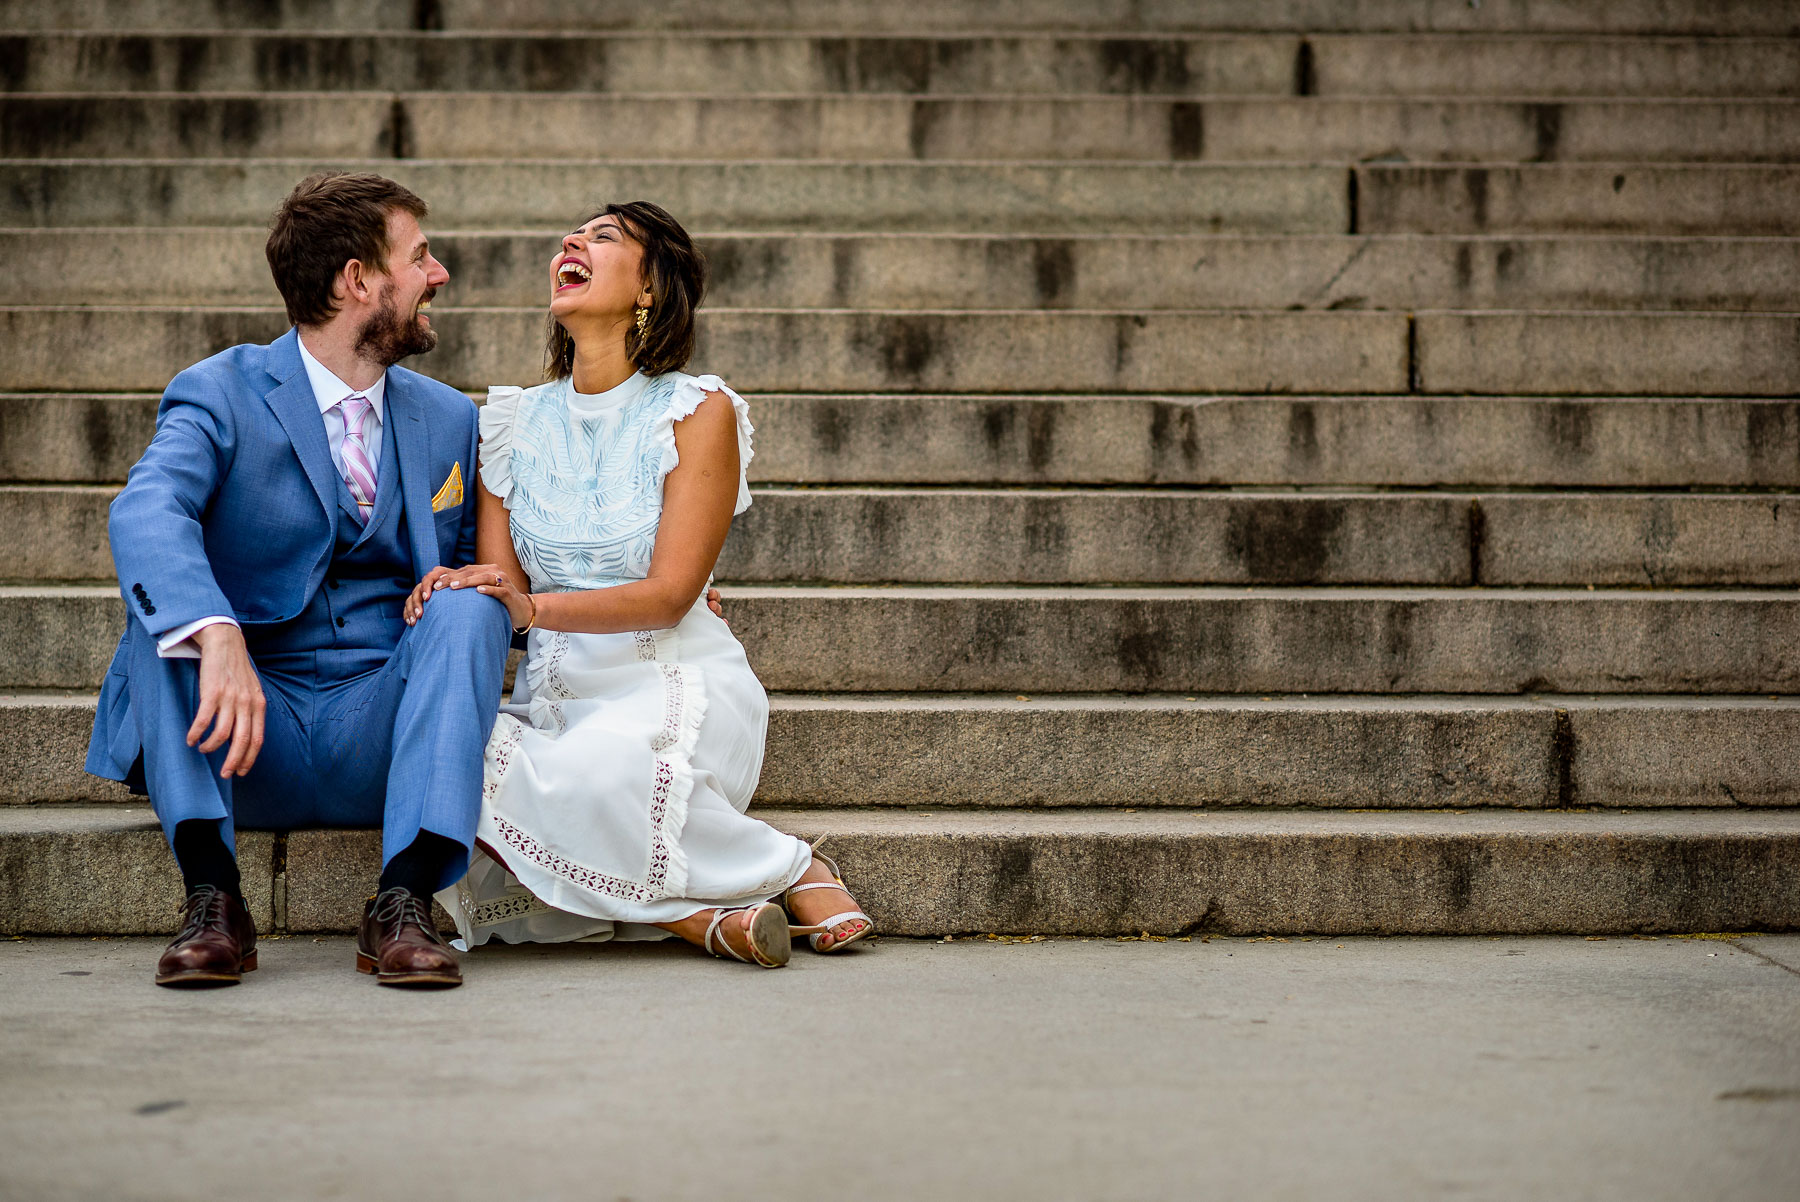 Central Park NYC Wedding portrait bethesda terrace steps